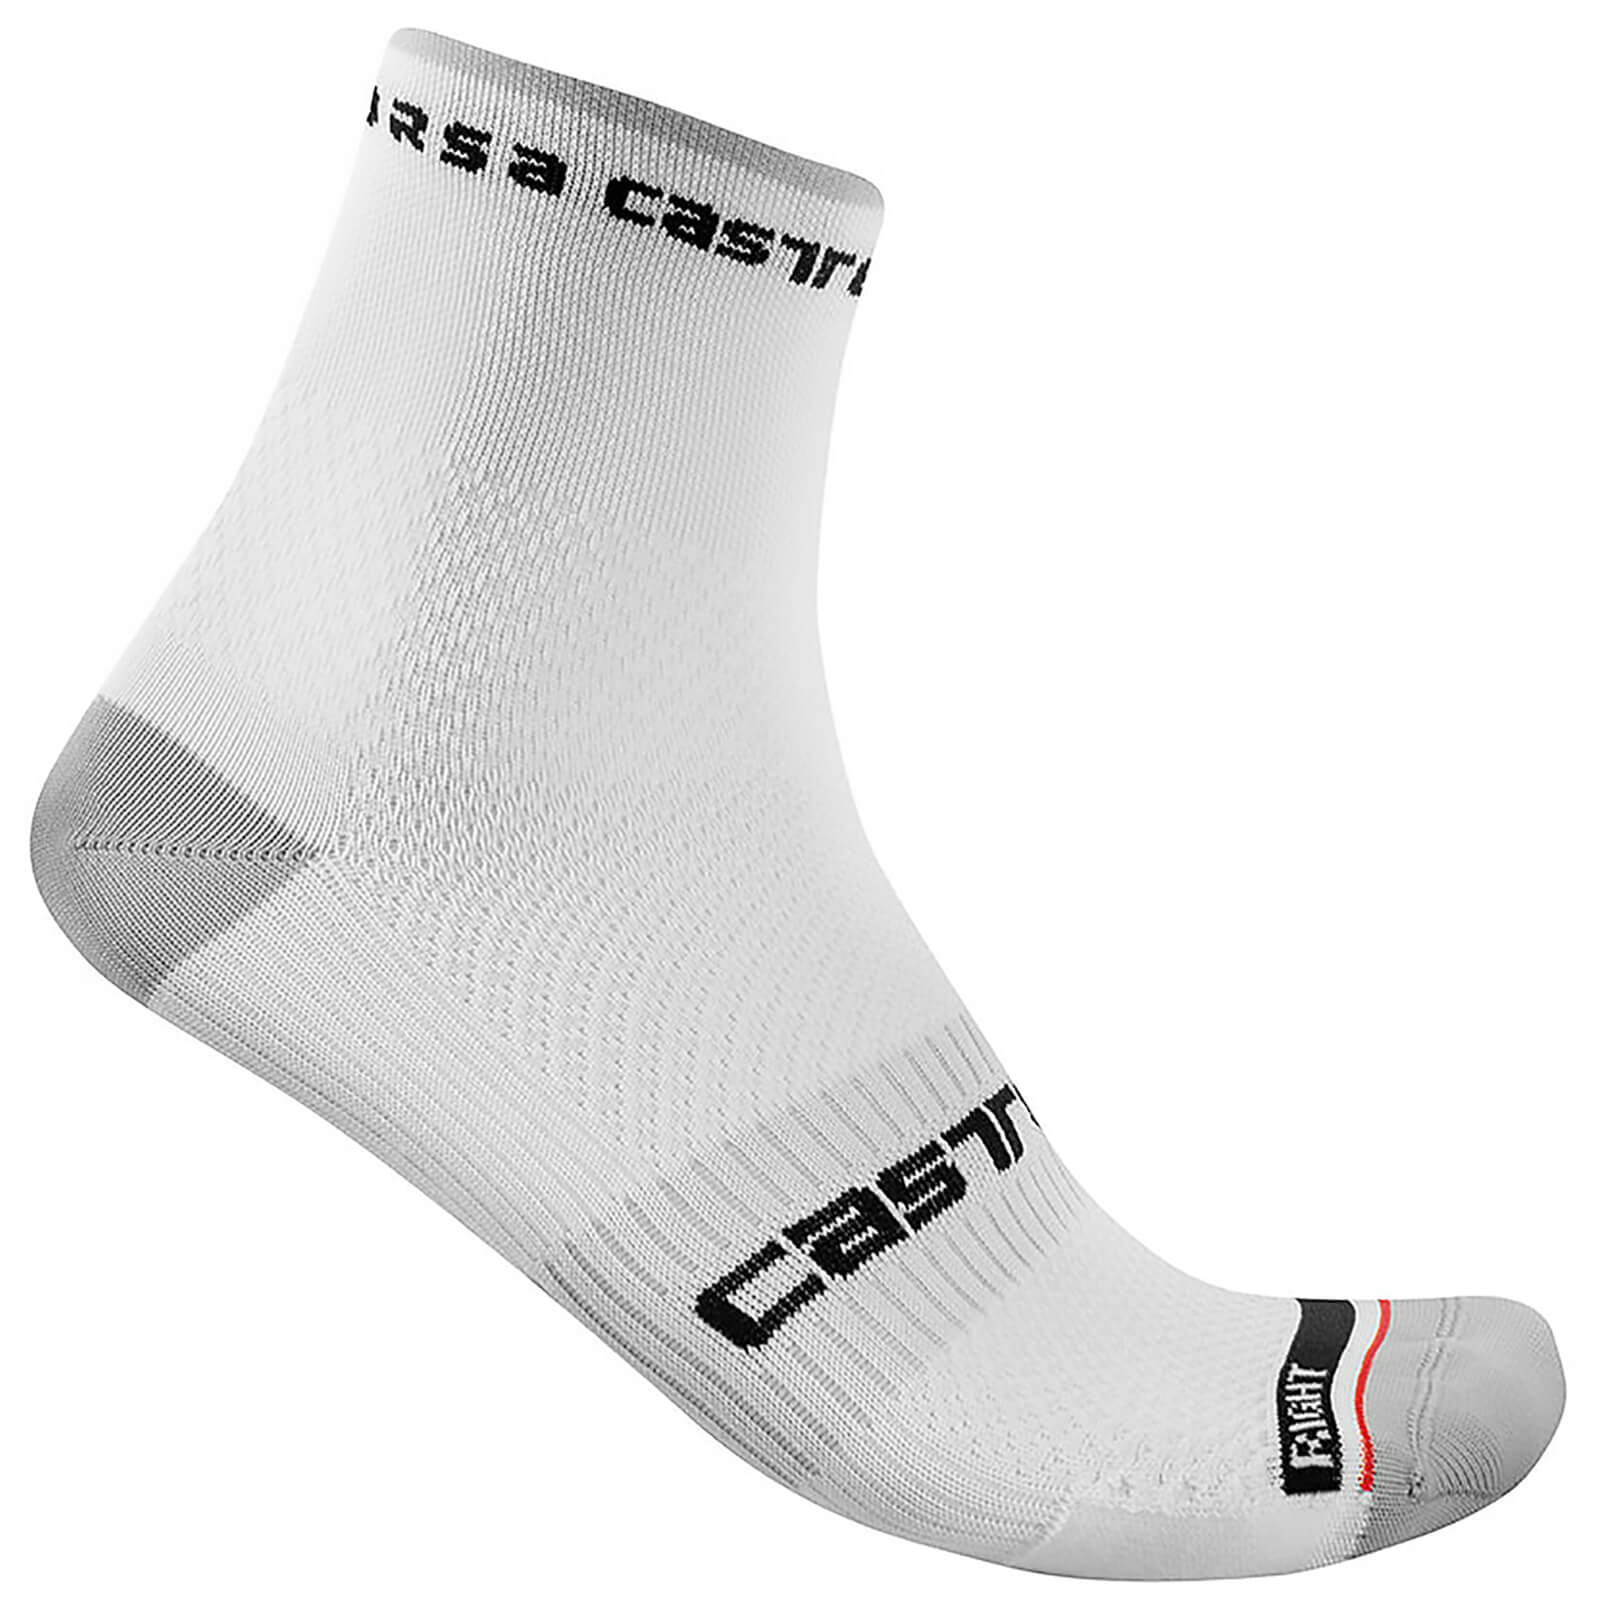 Castelli Rosso Corsa Pro 9 Socks - S/M - White